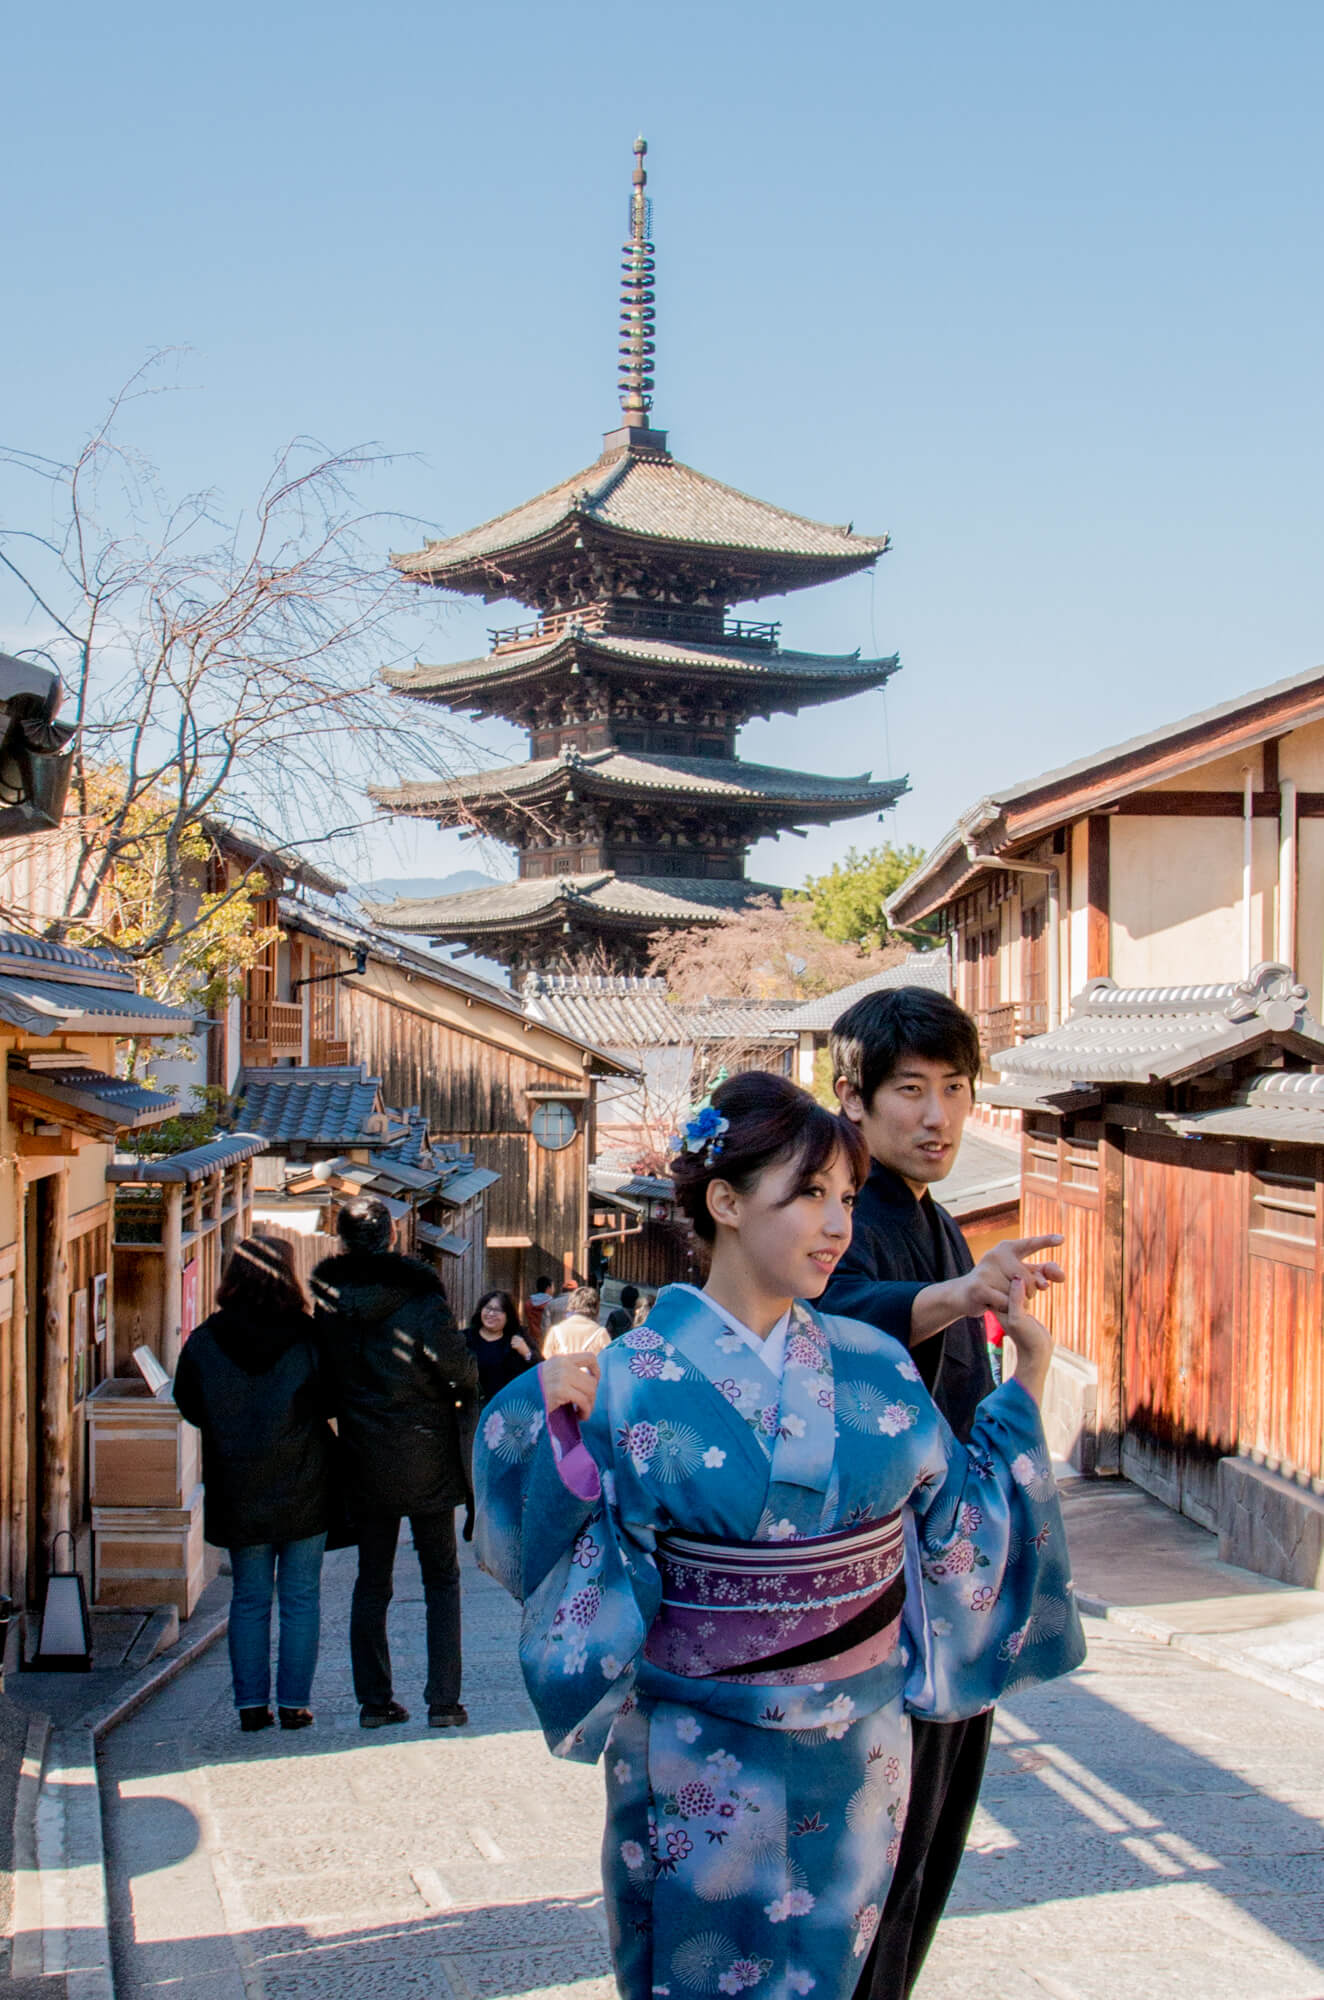 A Day in Kyoto: Shrines, Street Food & Kimonos